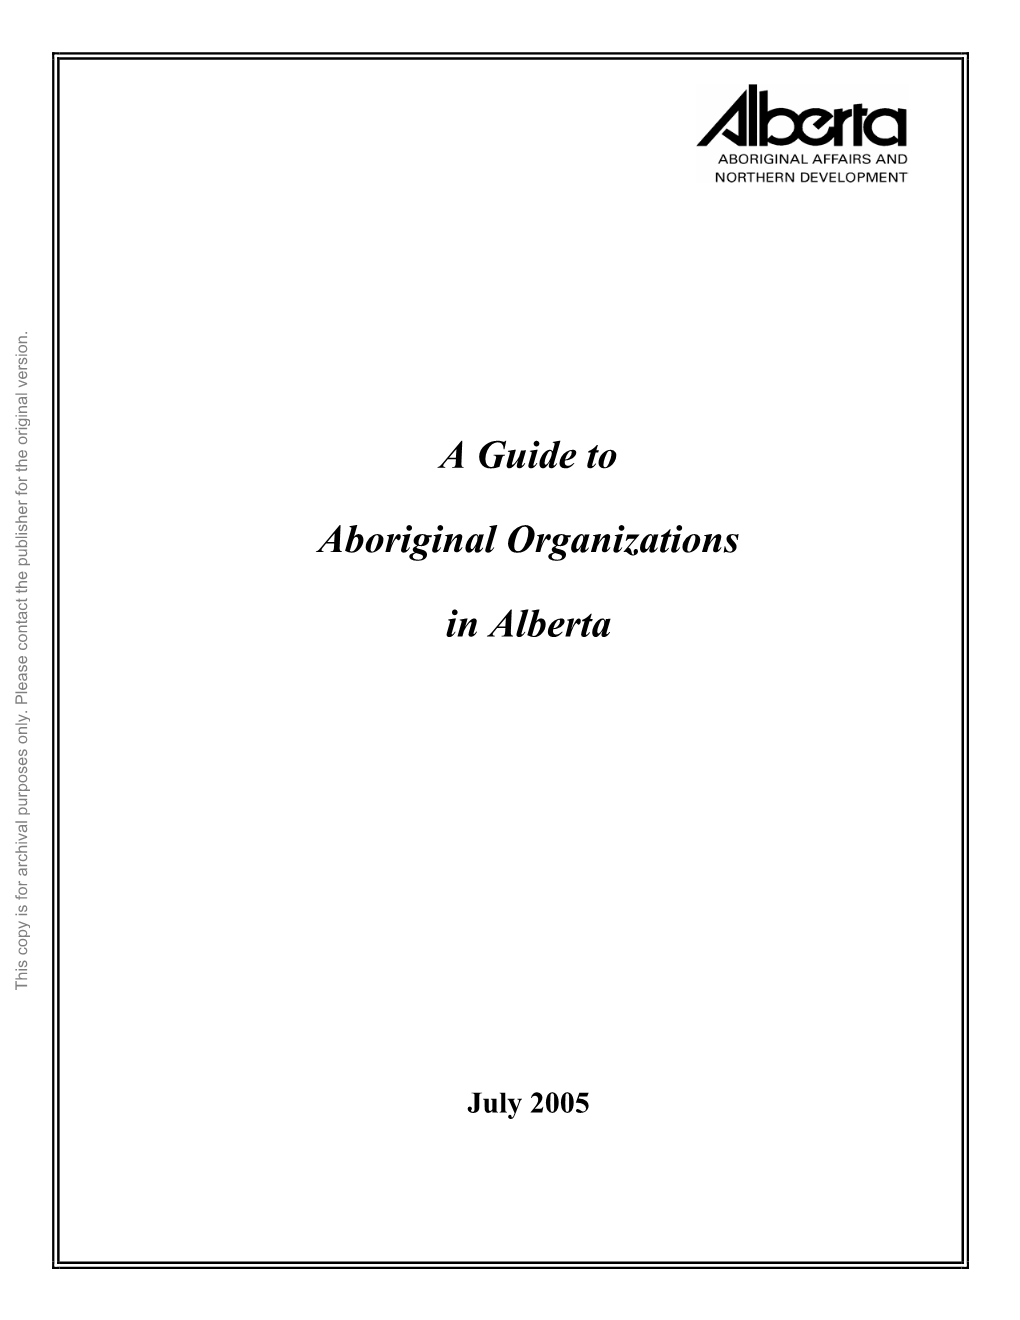 A Guide to Aboriginal Organizations in Alberta. July 2005